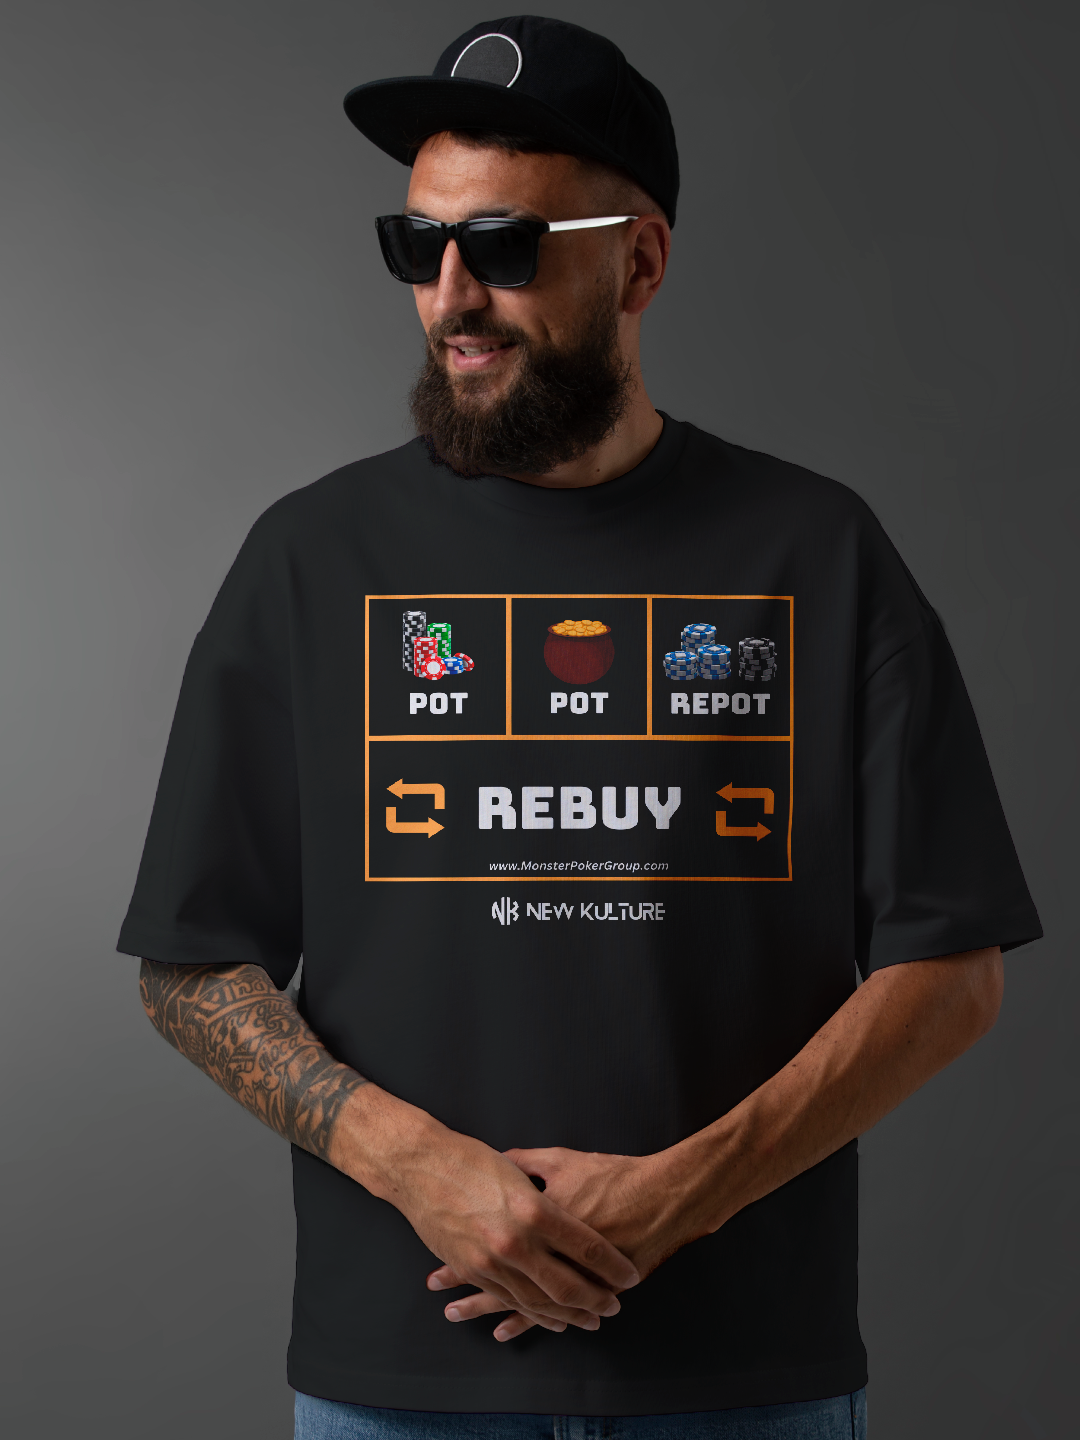 Black Unisex Oversized Poker T-Shirt with 'Pot Pot Repot. Rebuy